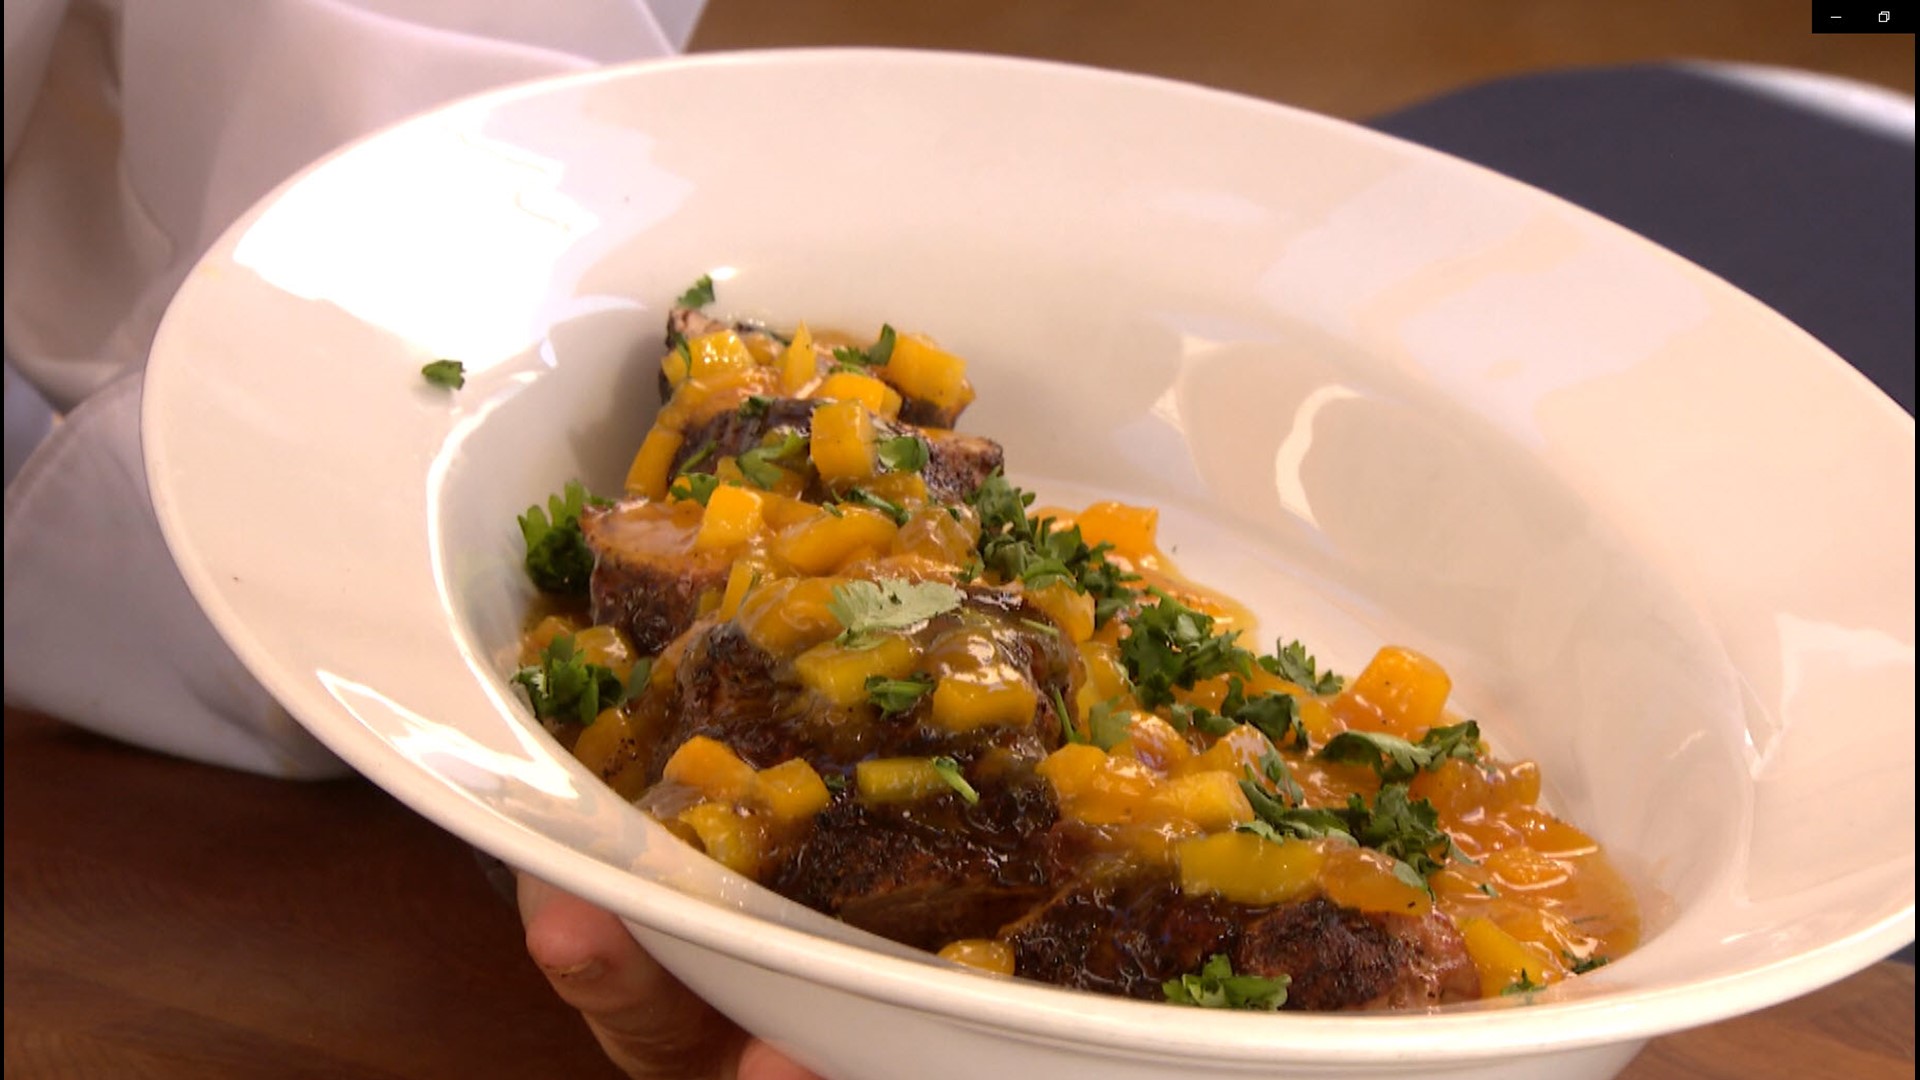 This week Shawn whips up savory pork tenderloin with a  mango chutney sauce.